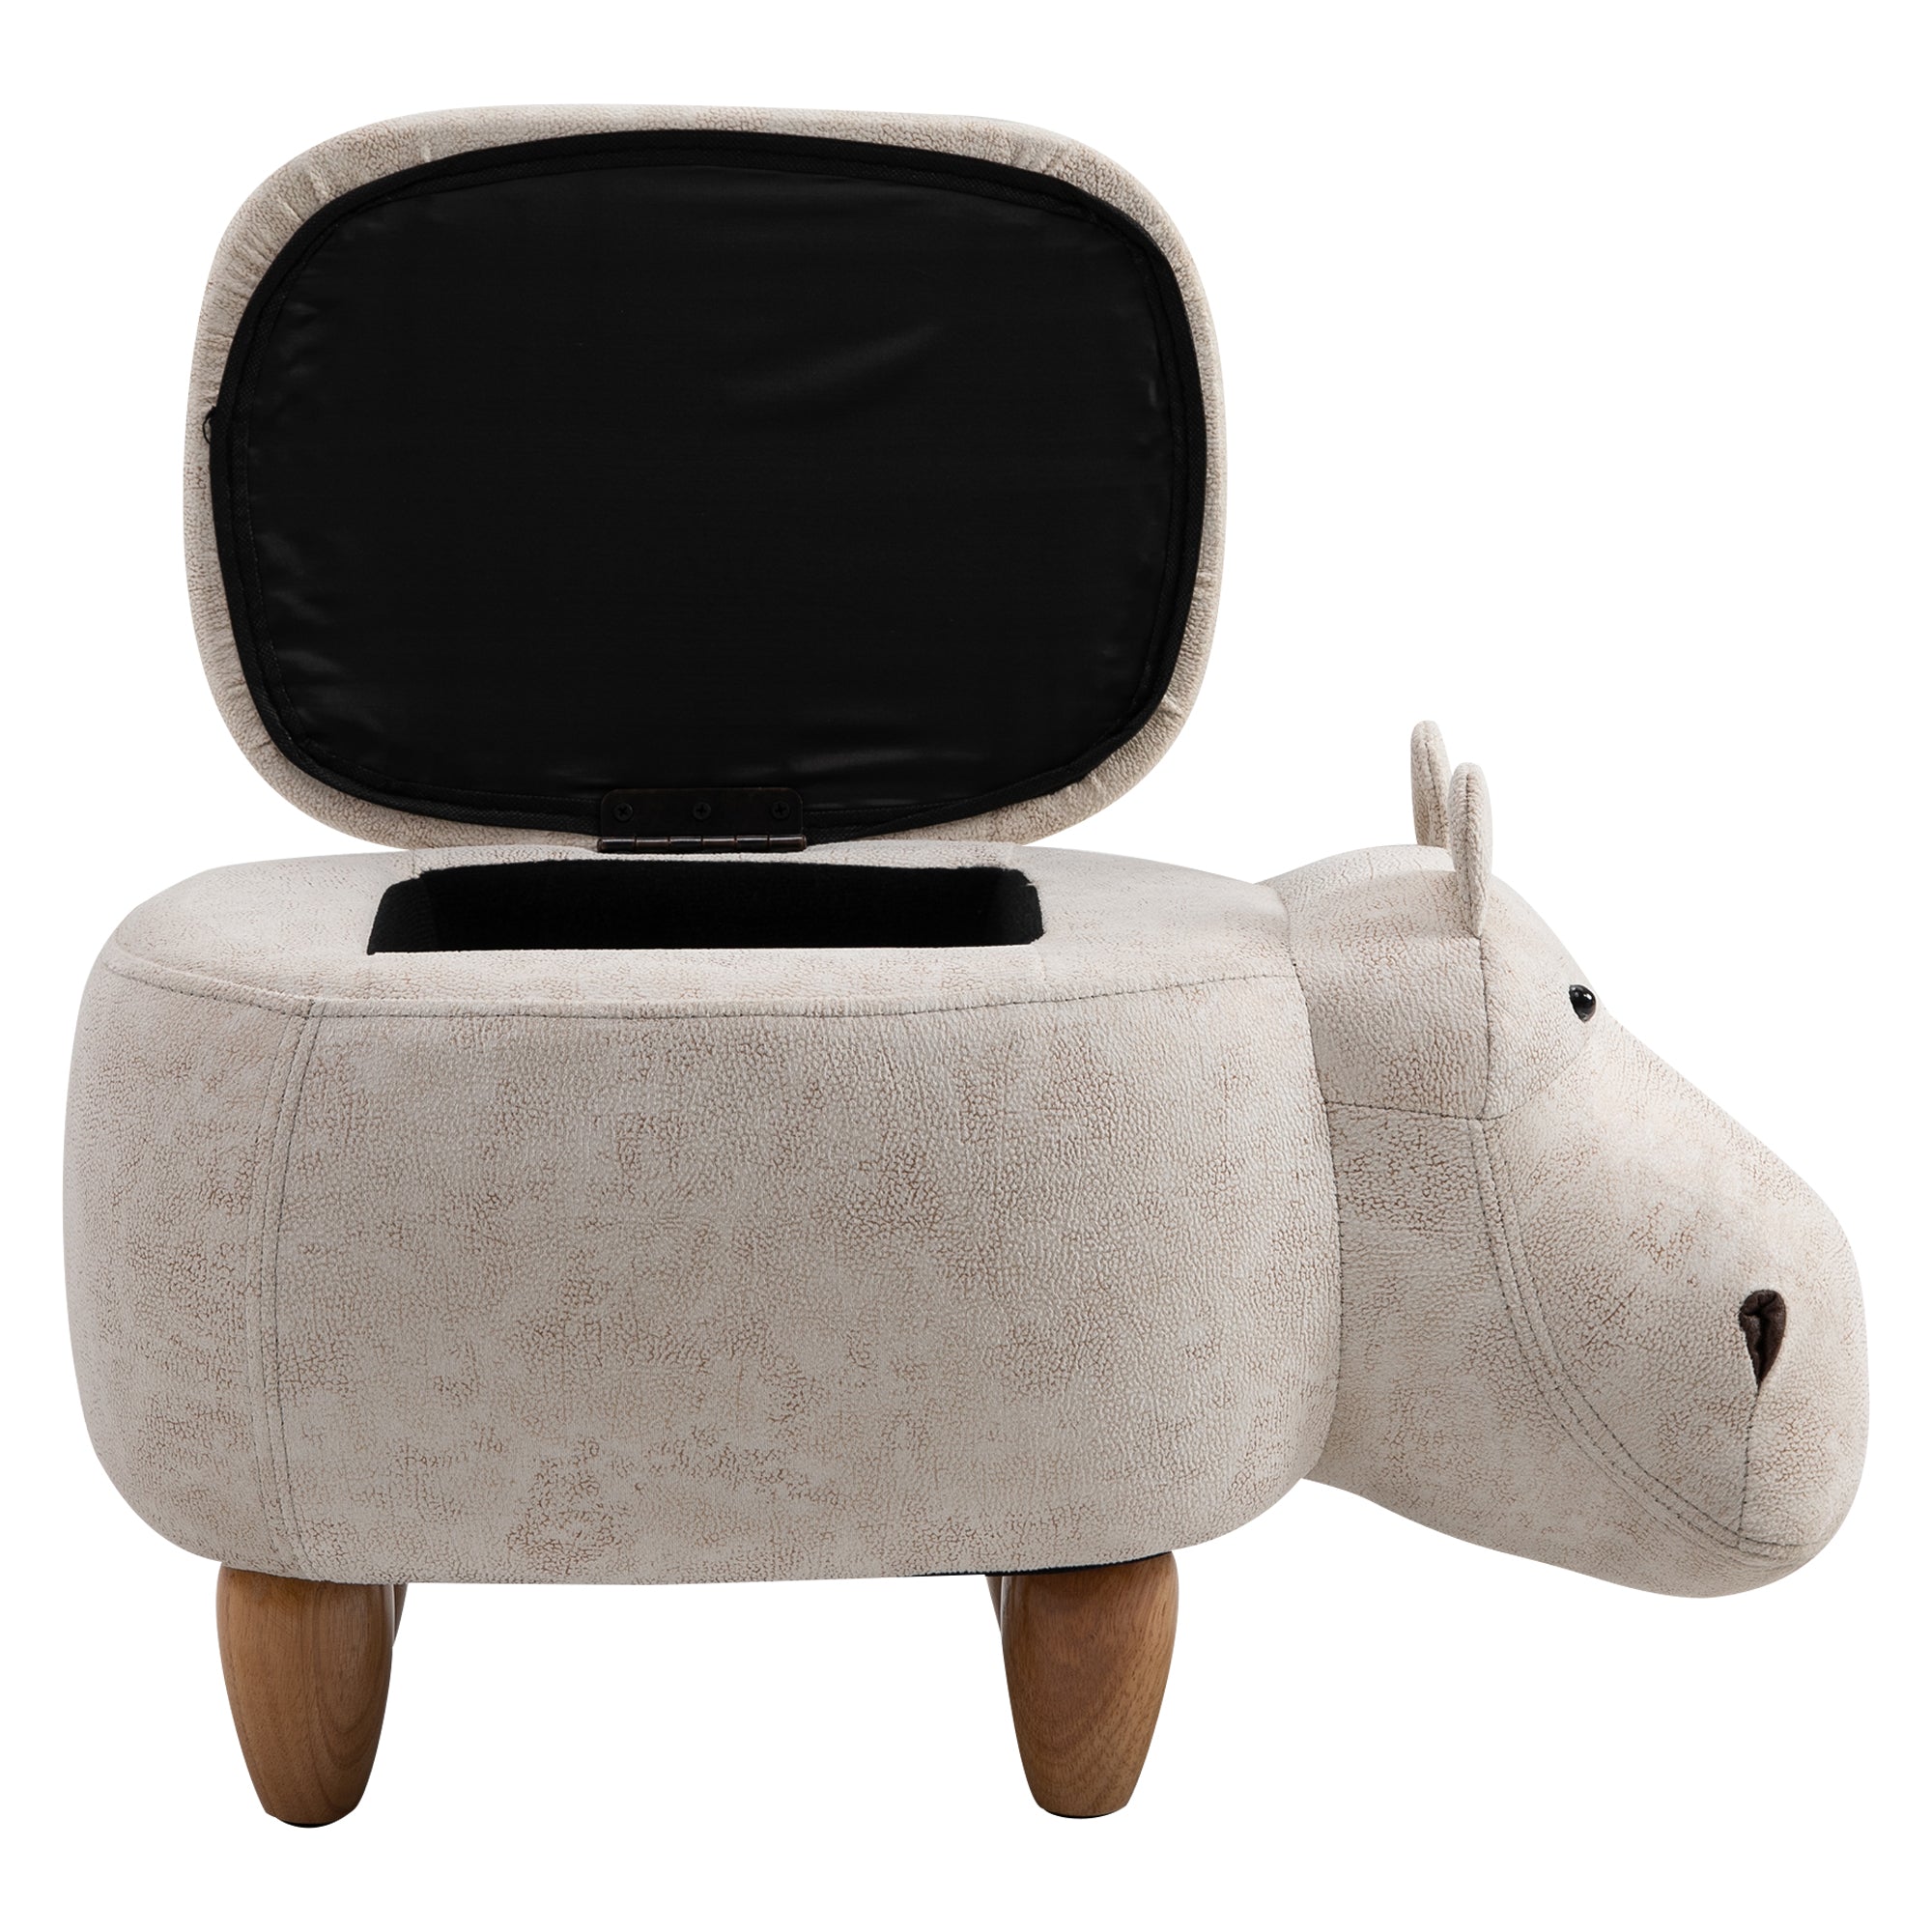 Hippo Storage Stool Cute Decoration Footrest Wood Frame Legs with Padding Lid Ottoman Animal Furniture Cream 36 x 65cm-0